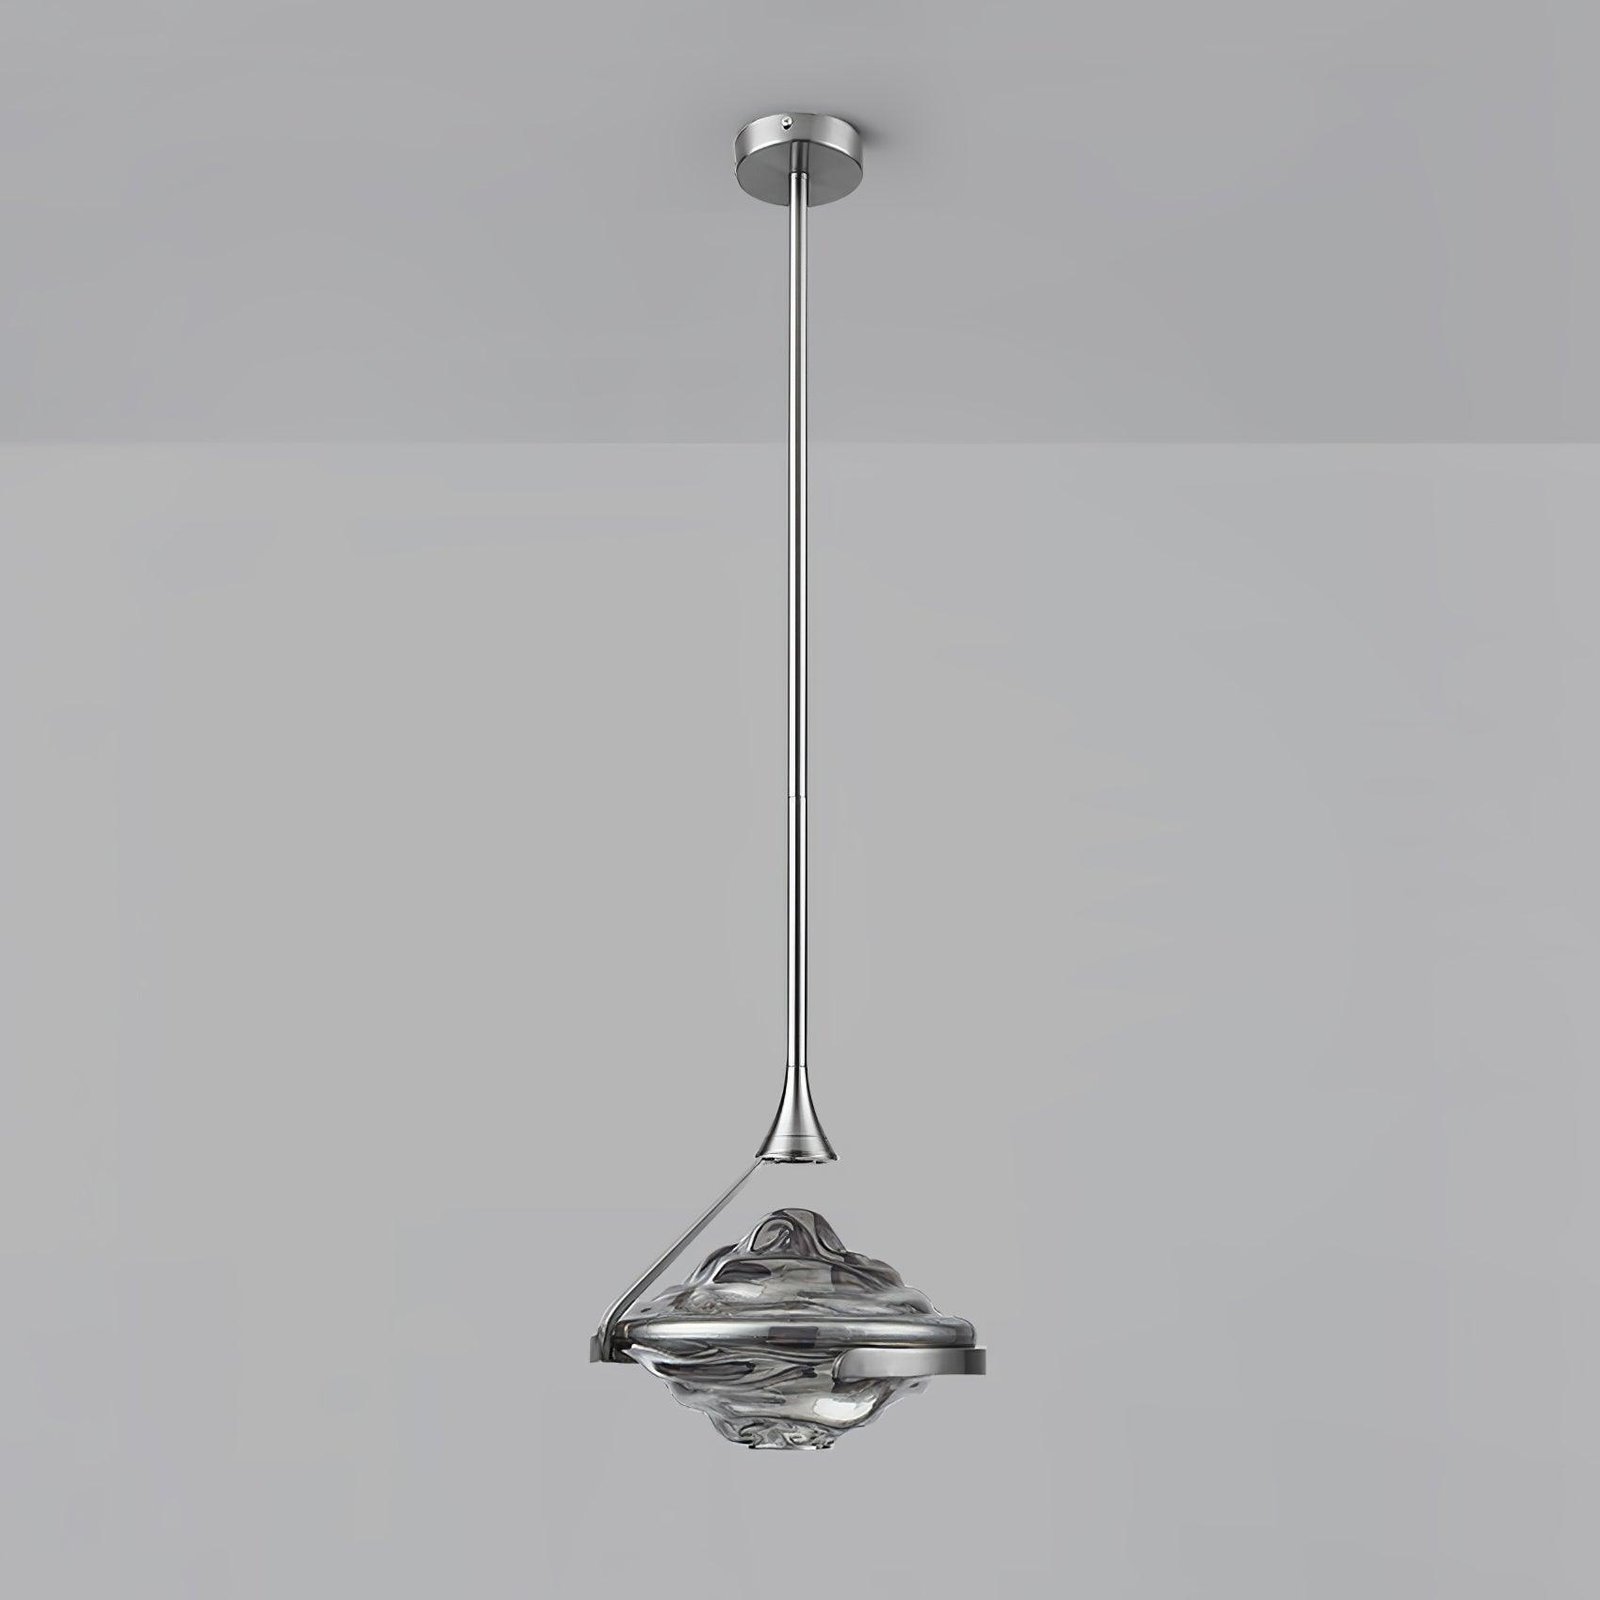 Diamond Crystal Pendant Lamp 9.8" Diameter x 9.8" Height, 25cm Diameter x 120cm Height, Chrome and Smoke Grey, with Cool Light